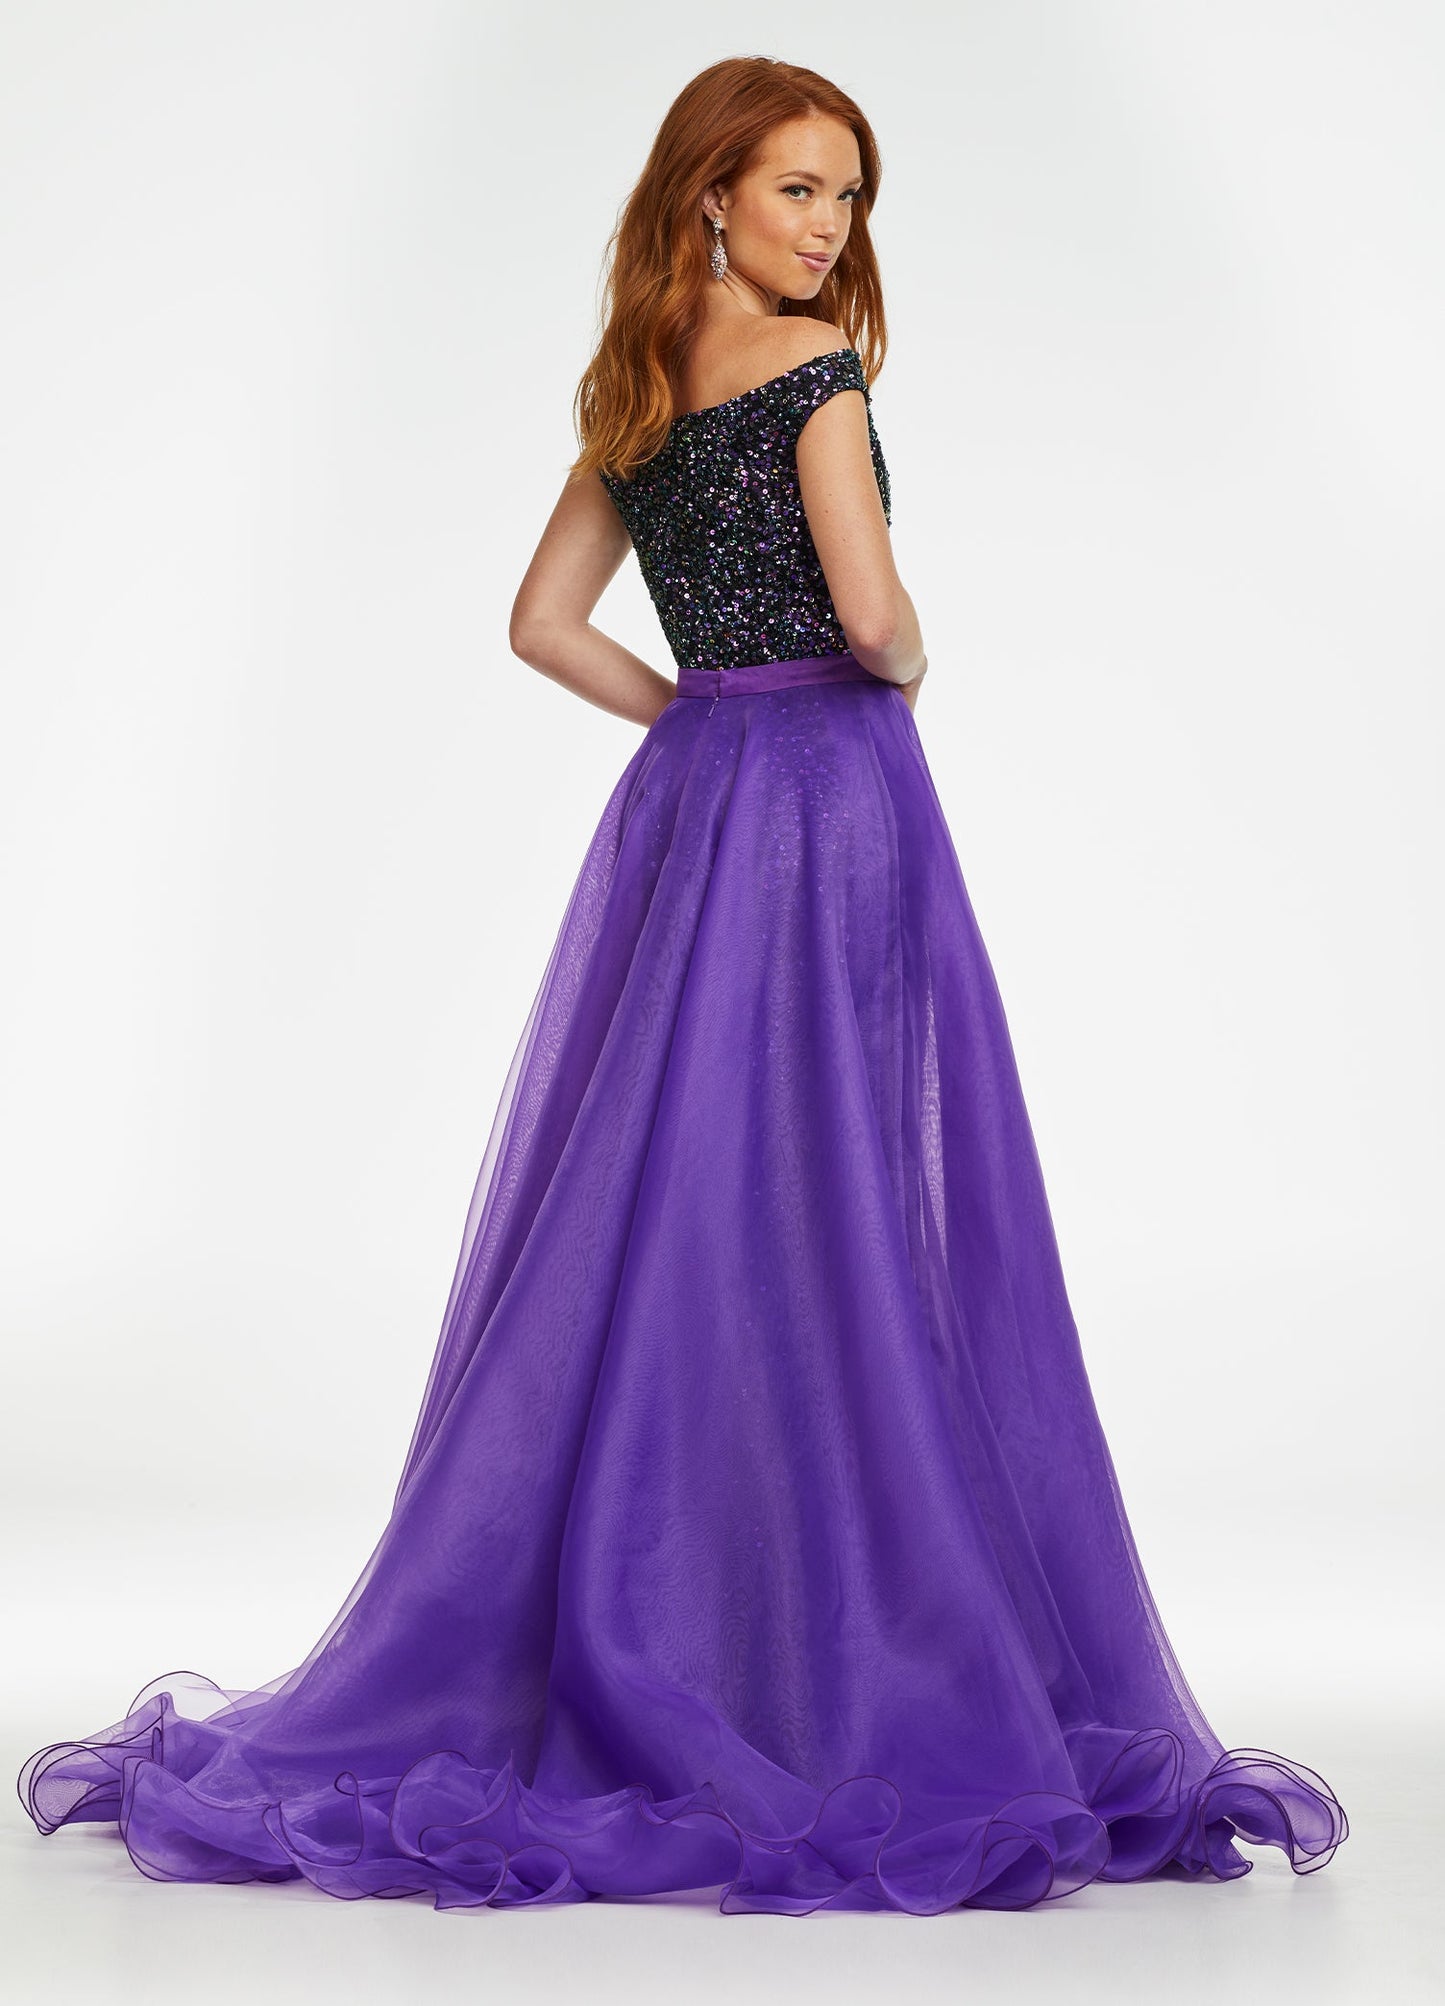 Ashley Lauren 1740 Size 6, 14 Purple Long Organza Overskirt Wire Hem Pageant Prom Layers